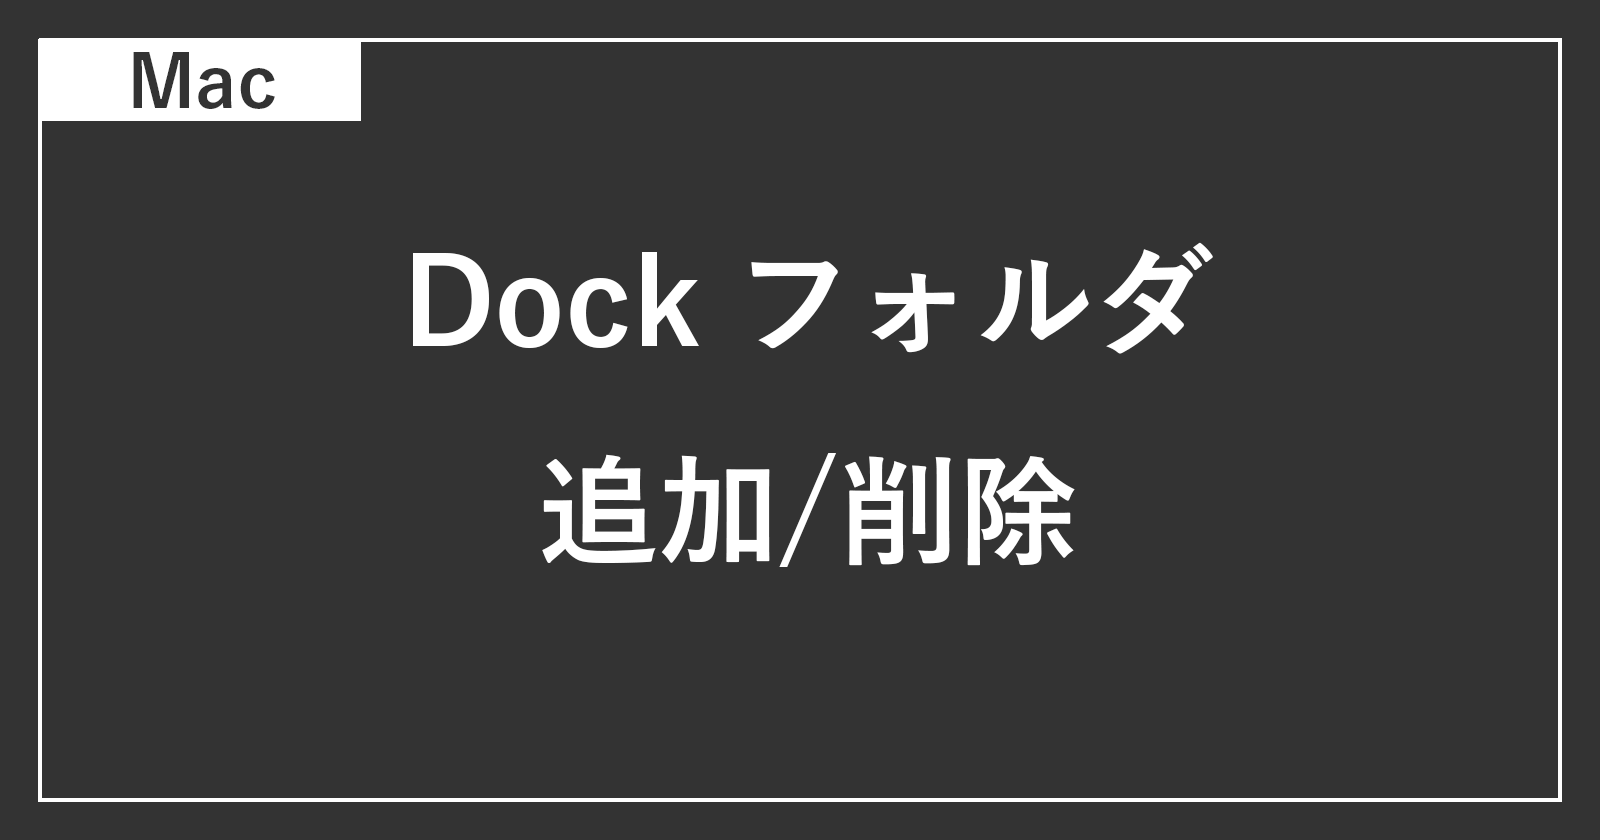 mac dock folder